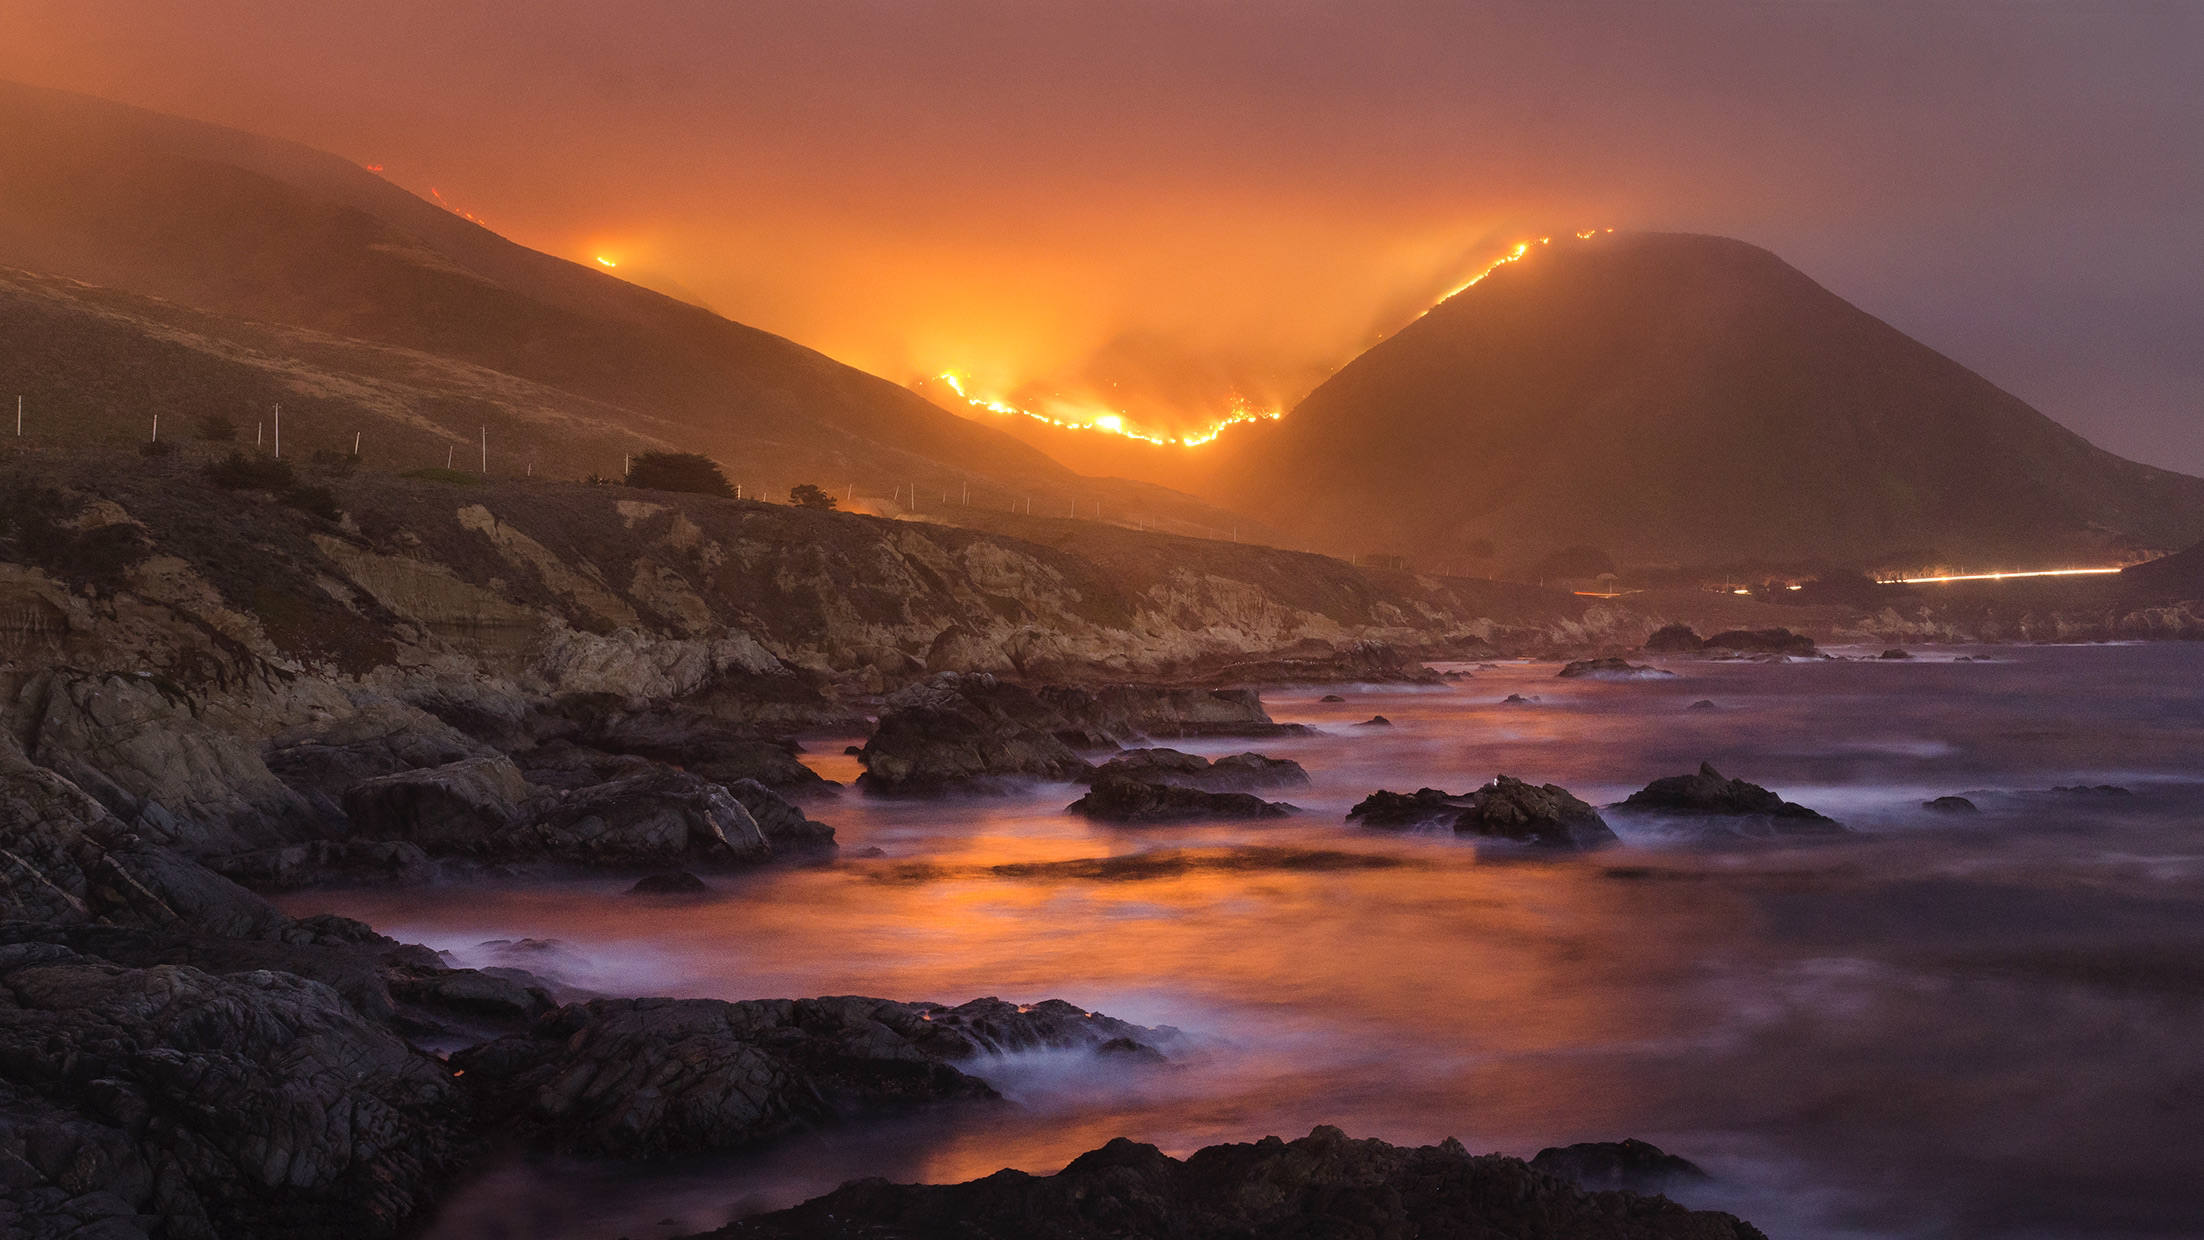 Extraordinary photos of wildfires